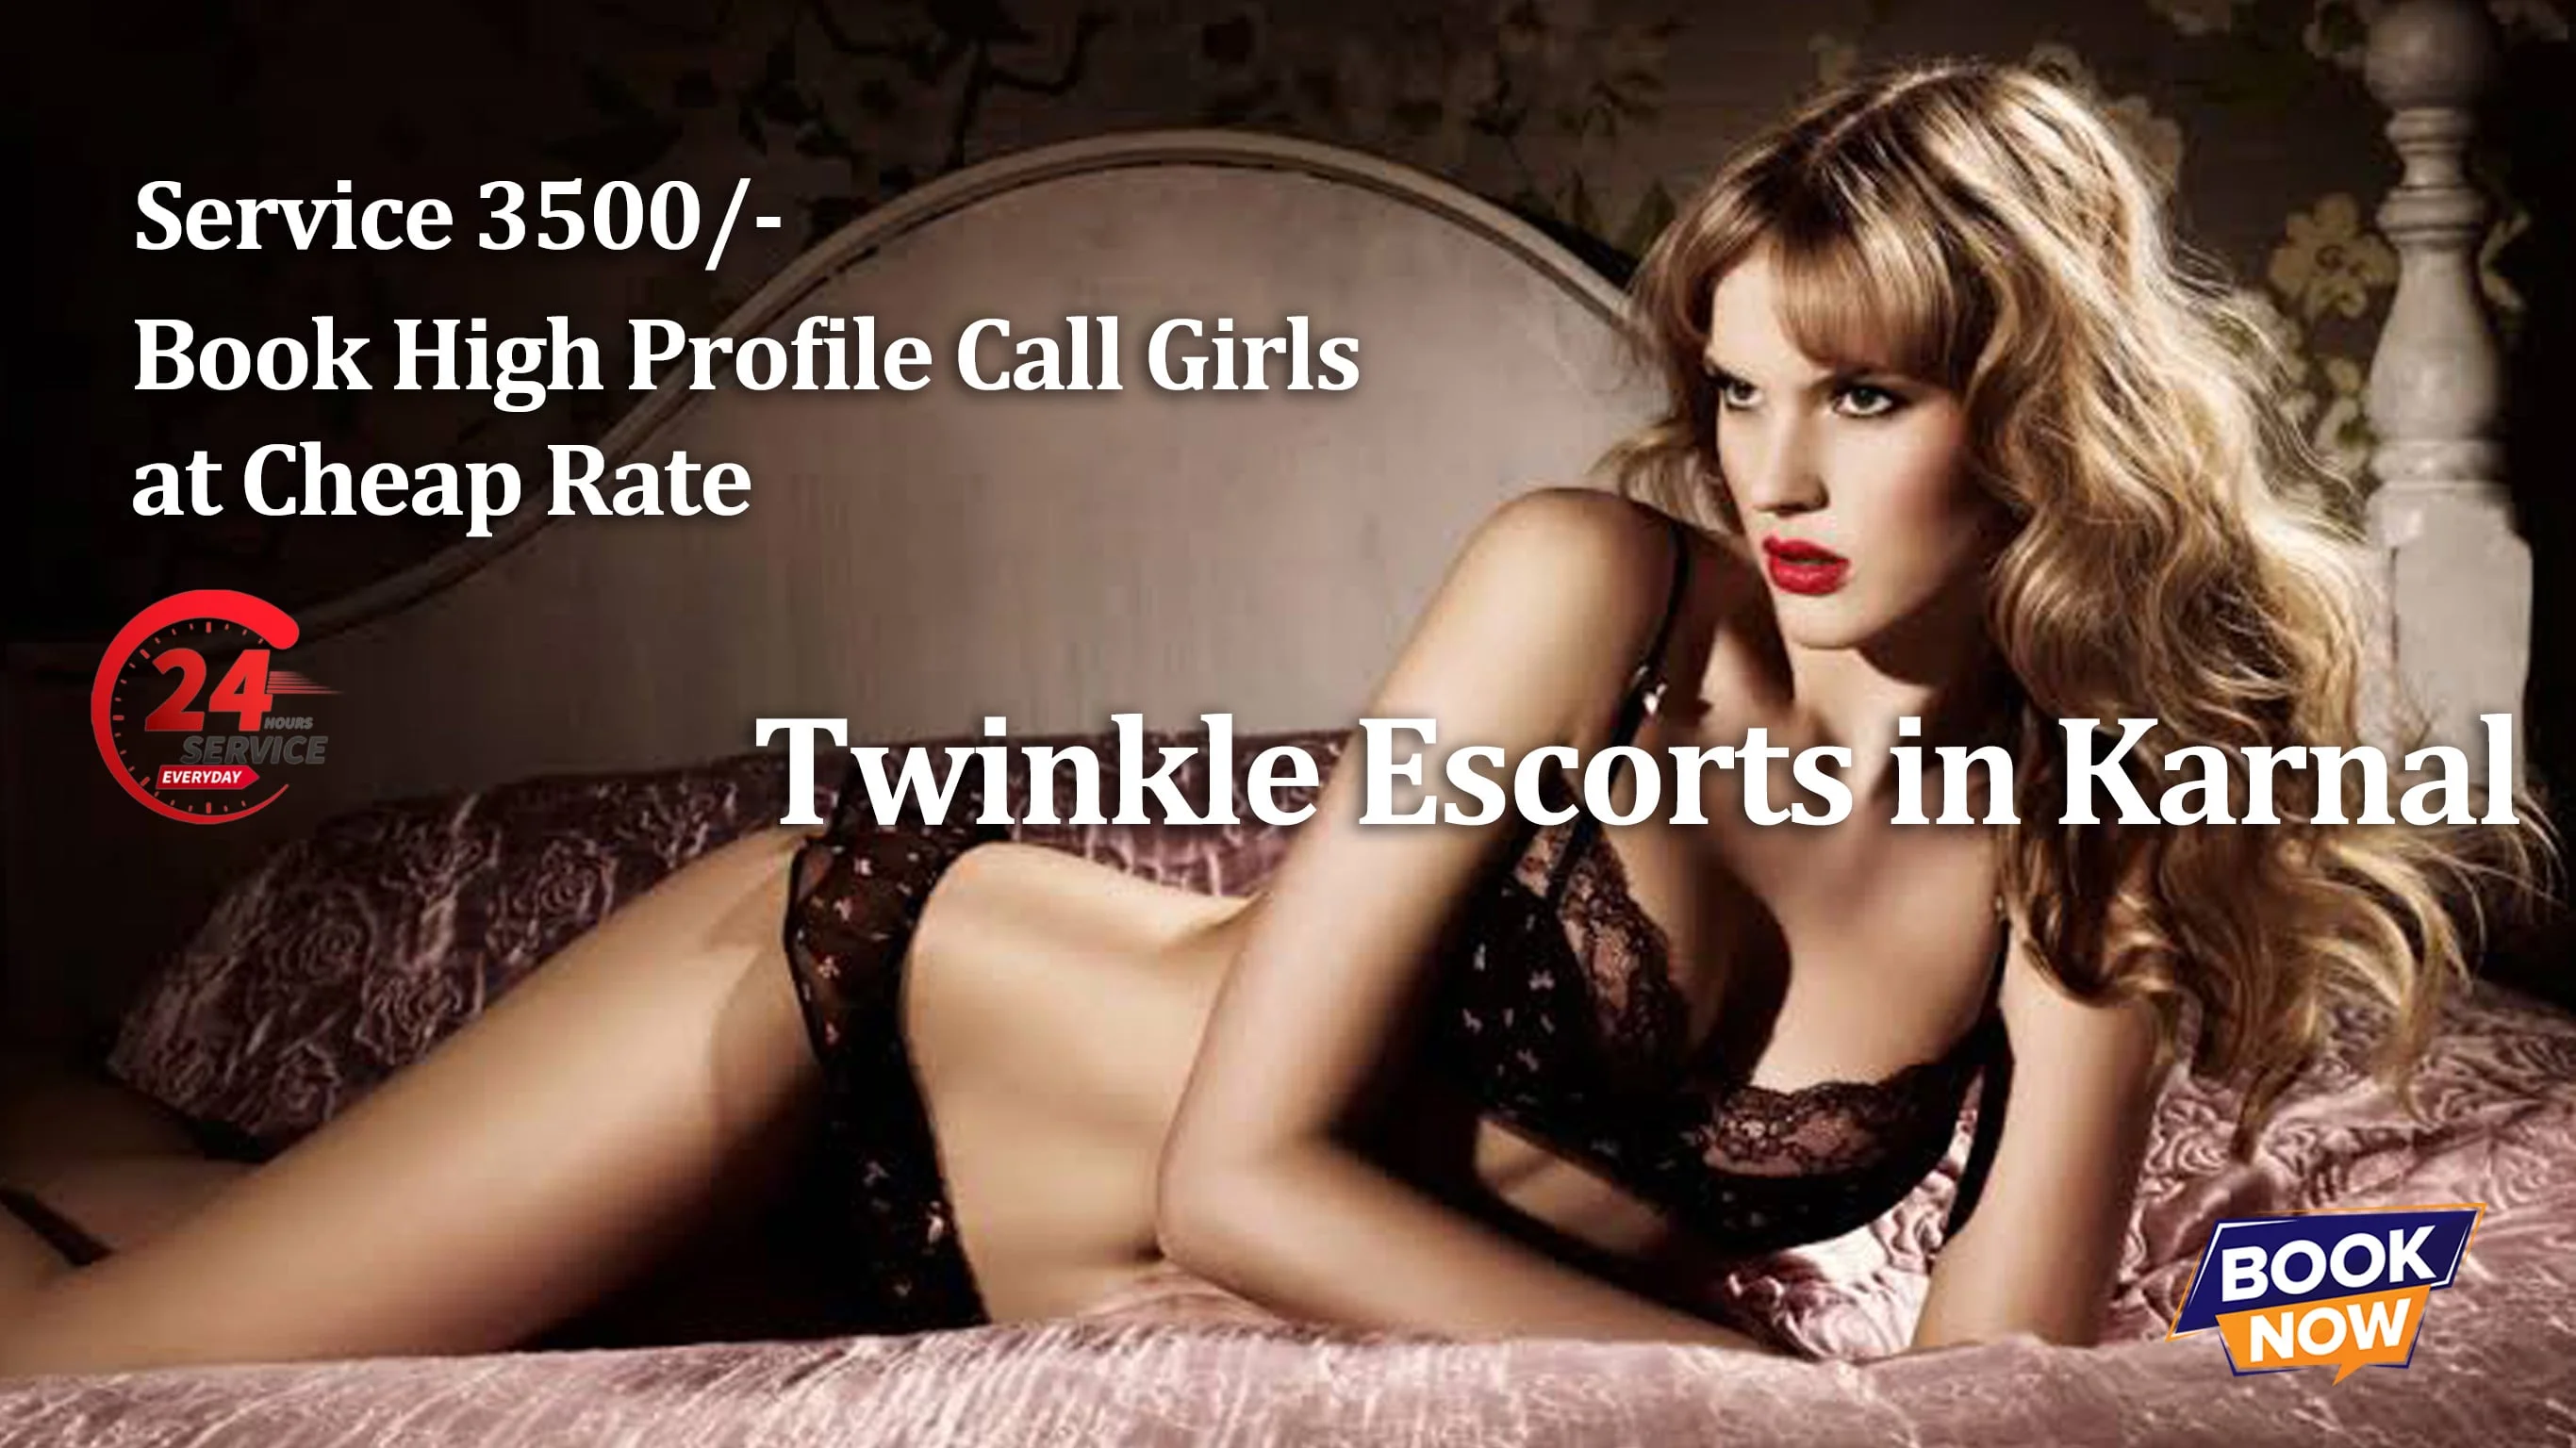 Model Escort give description of twinkle escort service charges in Karnal